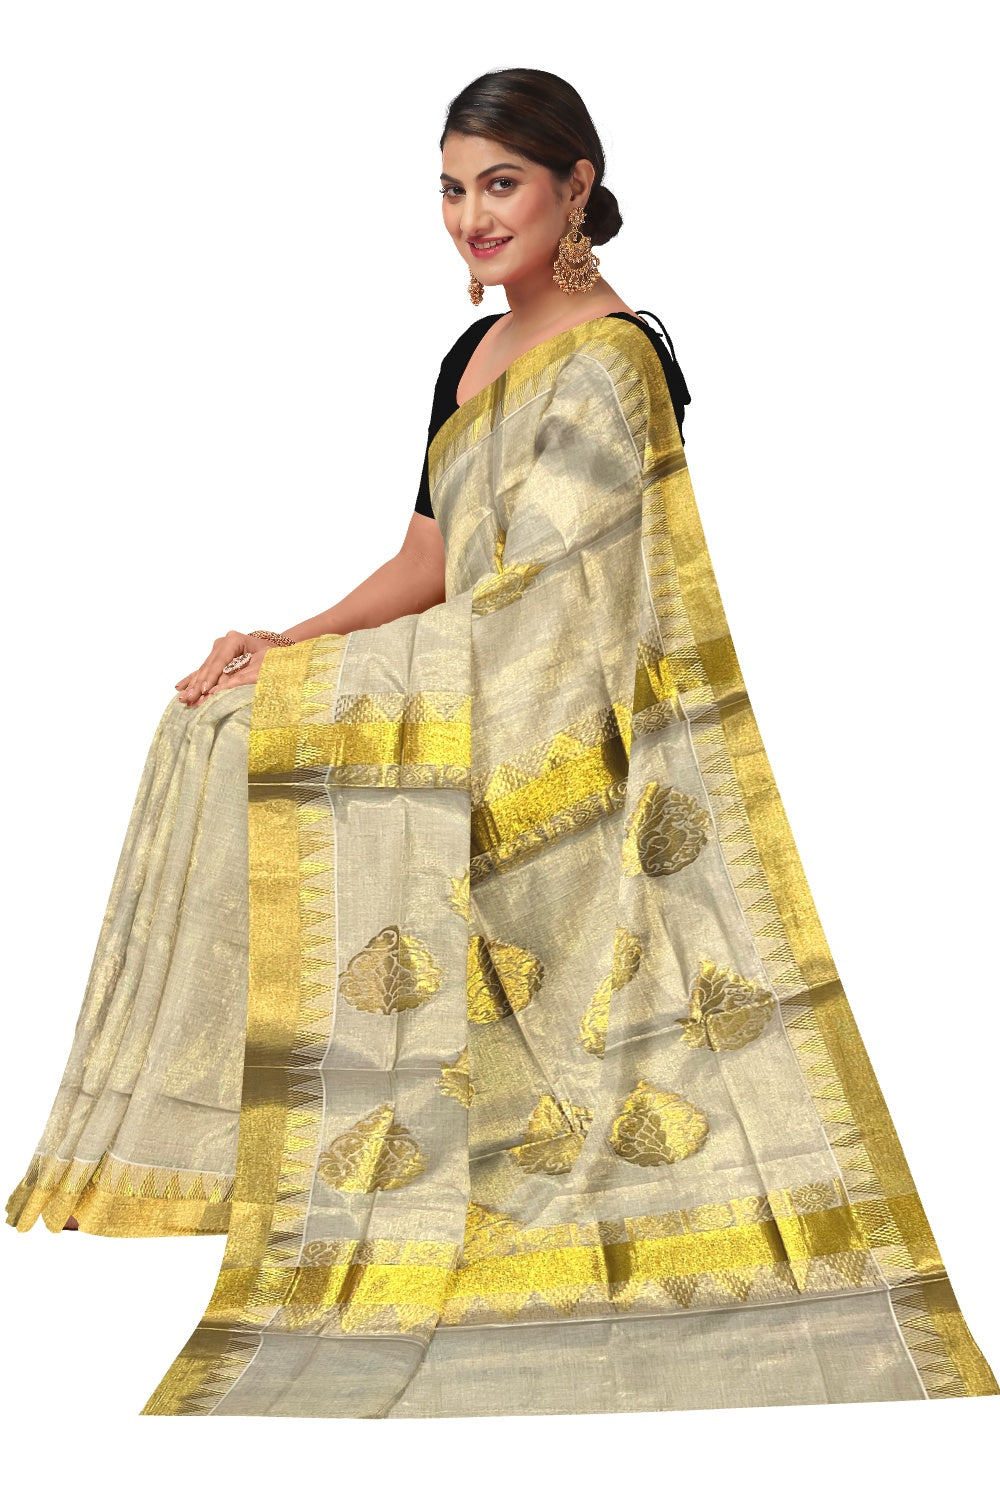 Kerala Tissue Heavy Work Saree with Floral Kasavu Patterns